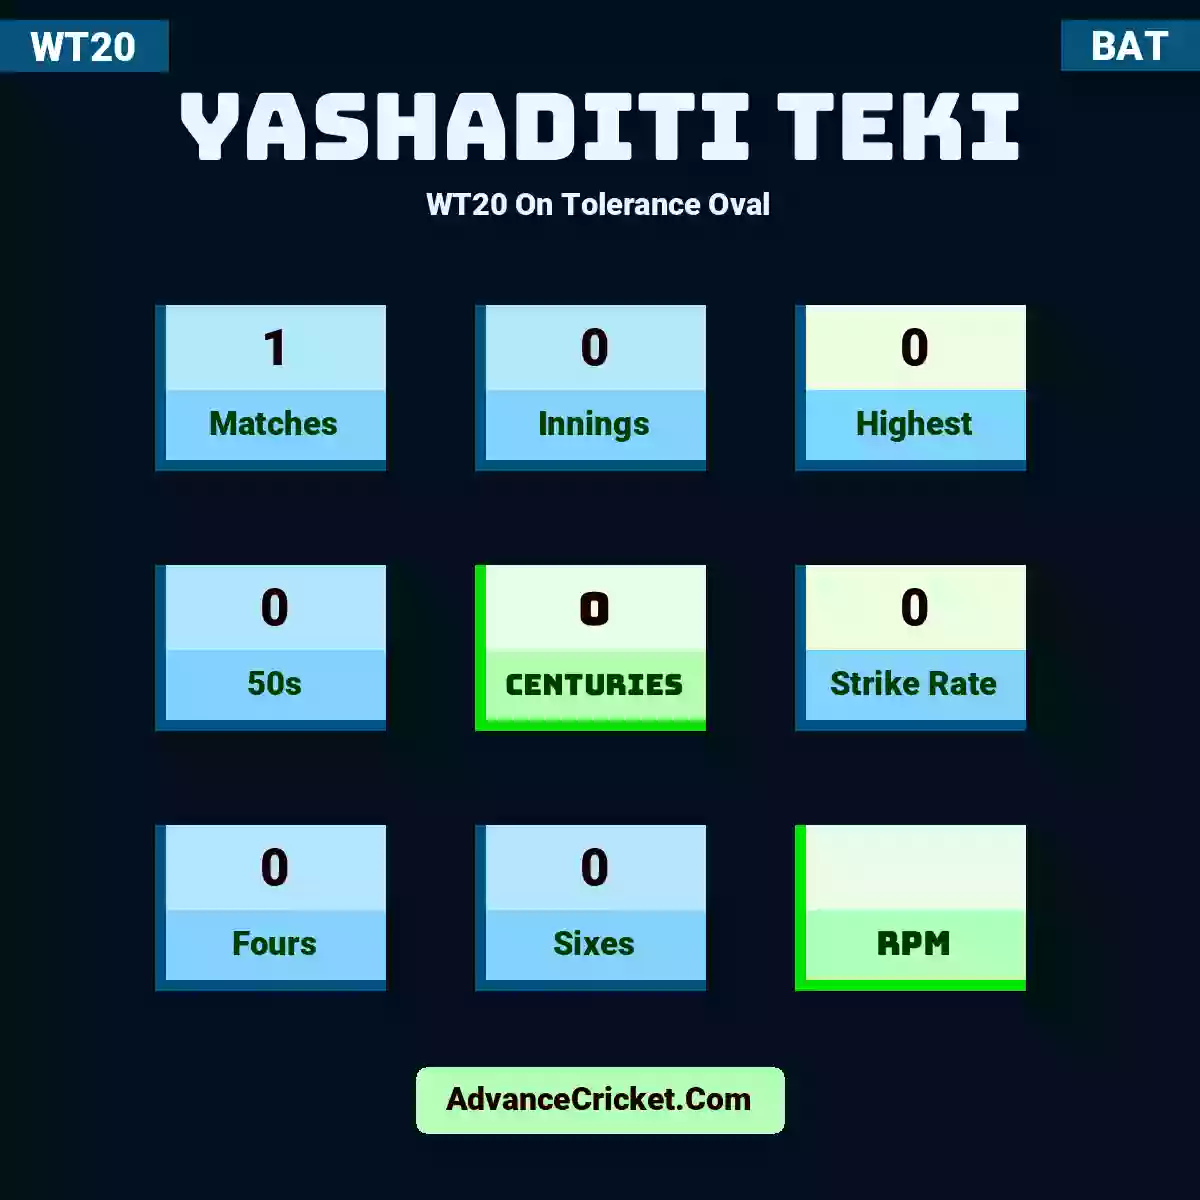 Yashaditi Teki WT20  On Tolerance Oval, Yashaditi Teki played 1 matches, scored 0 runs as highest, 0 half-centuries, and 0 centuries, with a strike rate of 0. Y.Teki hit 0 fours and 0 sixes.